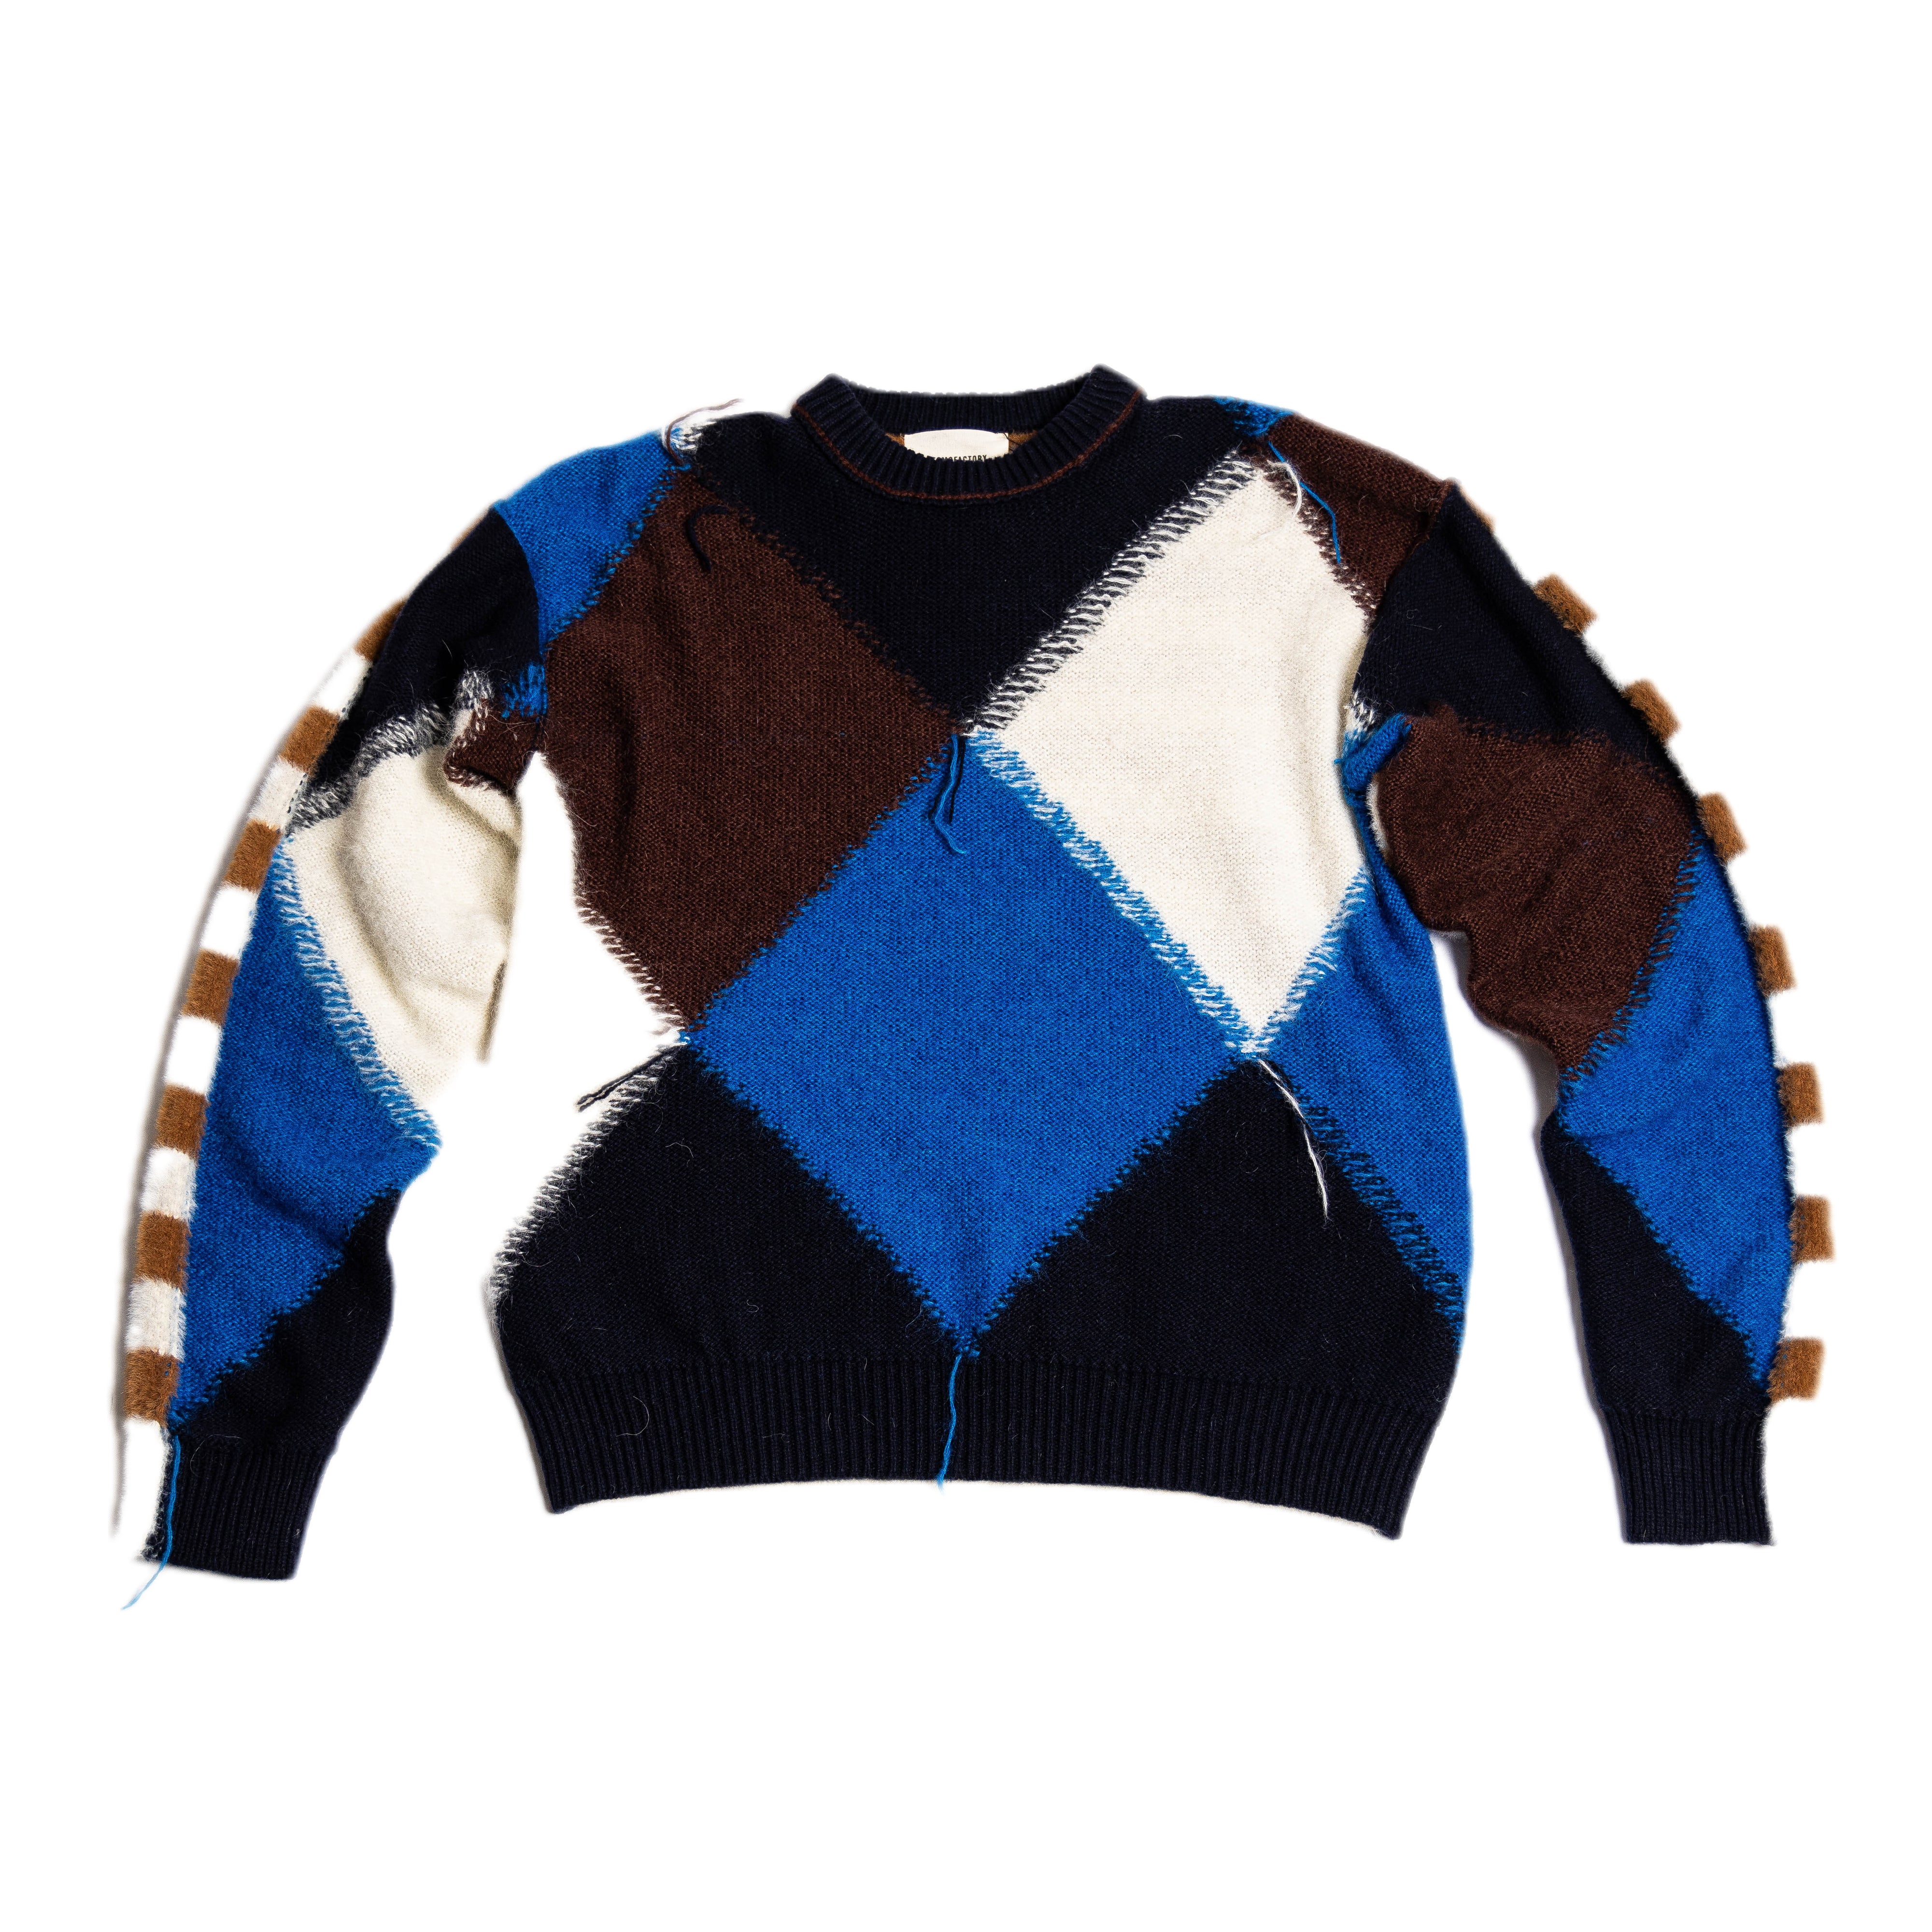 Atomo Knit Sweater